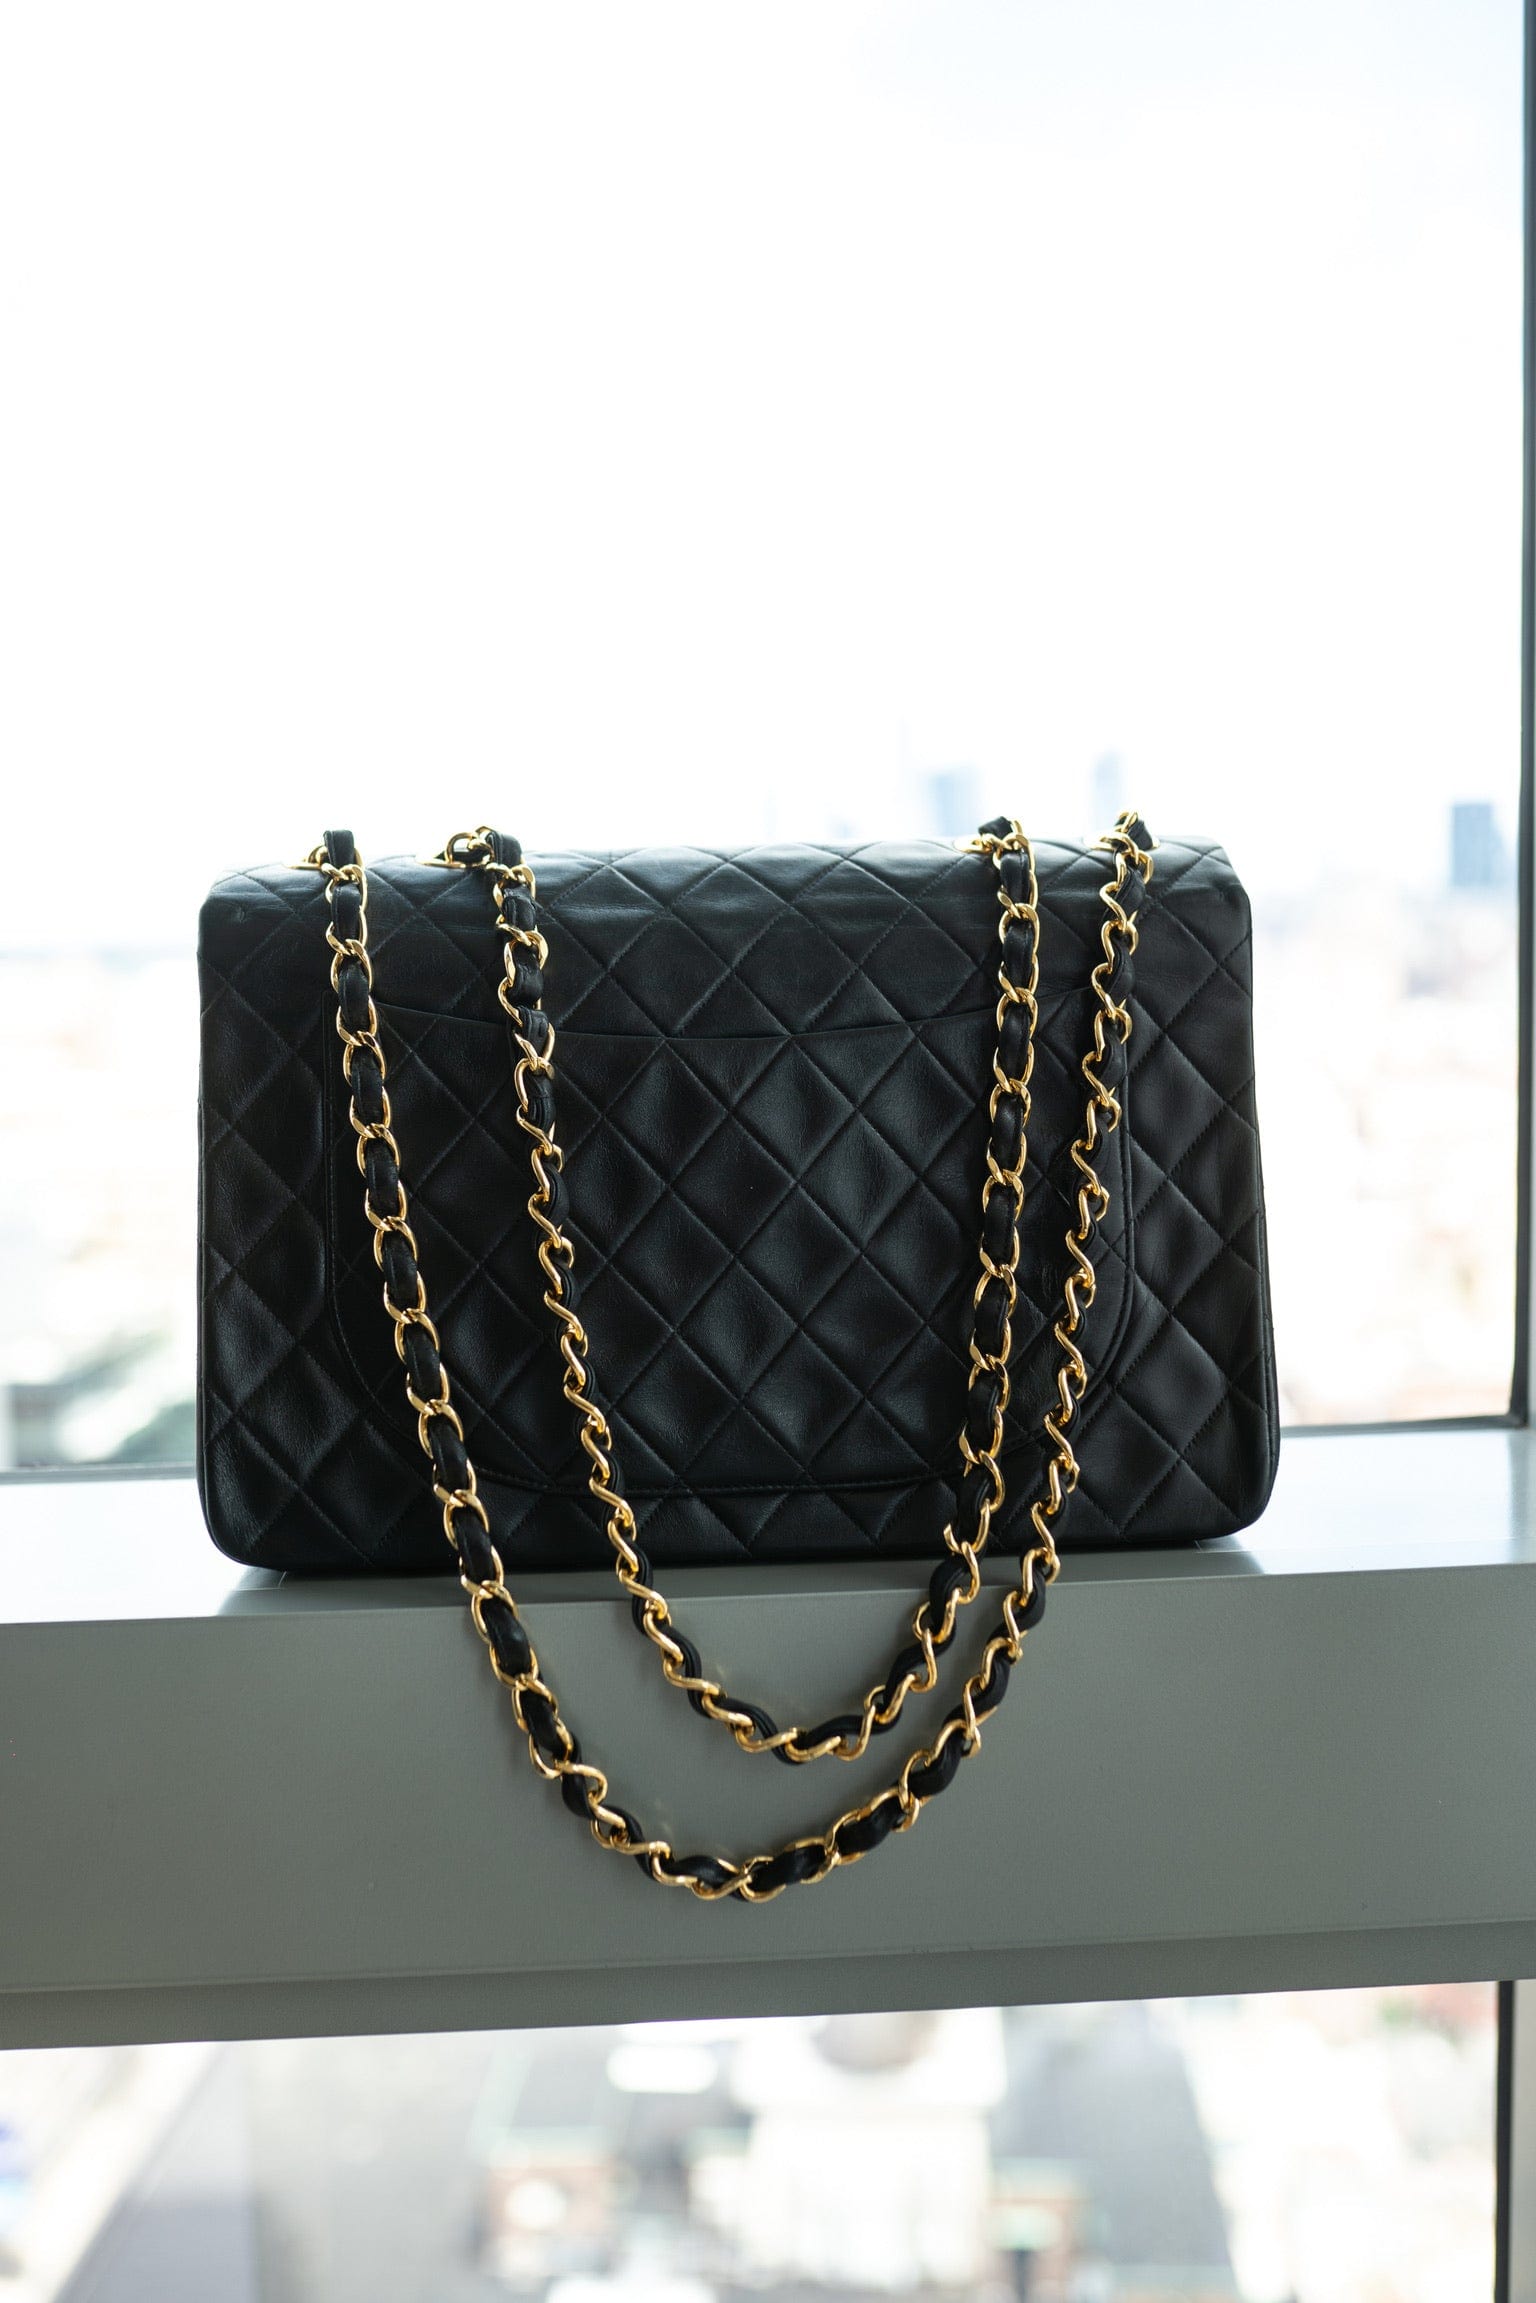 Chanel Chanel Vintage Classic Jumbo Shoulder Bag PXL1193